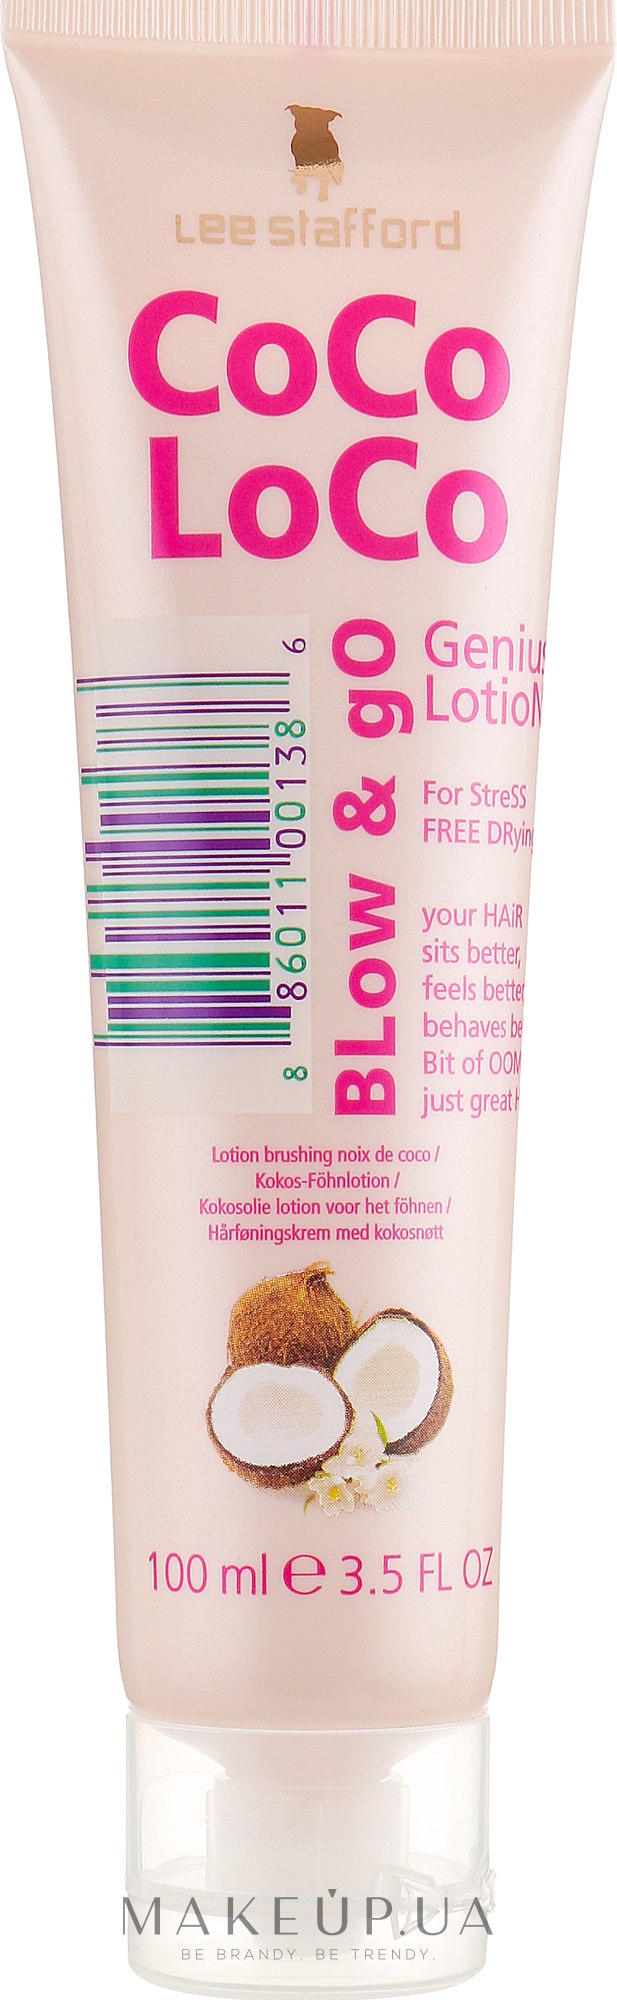 Средство для укладки волос - Lee Stafford Coco Loco Blow&Go Genius Lotion — фото 100ml